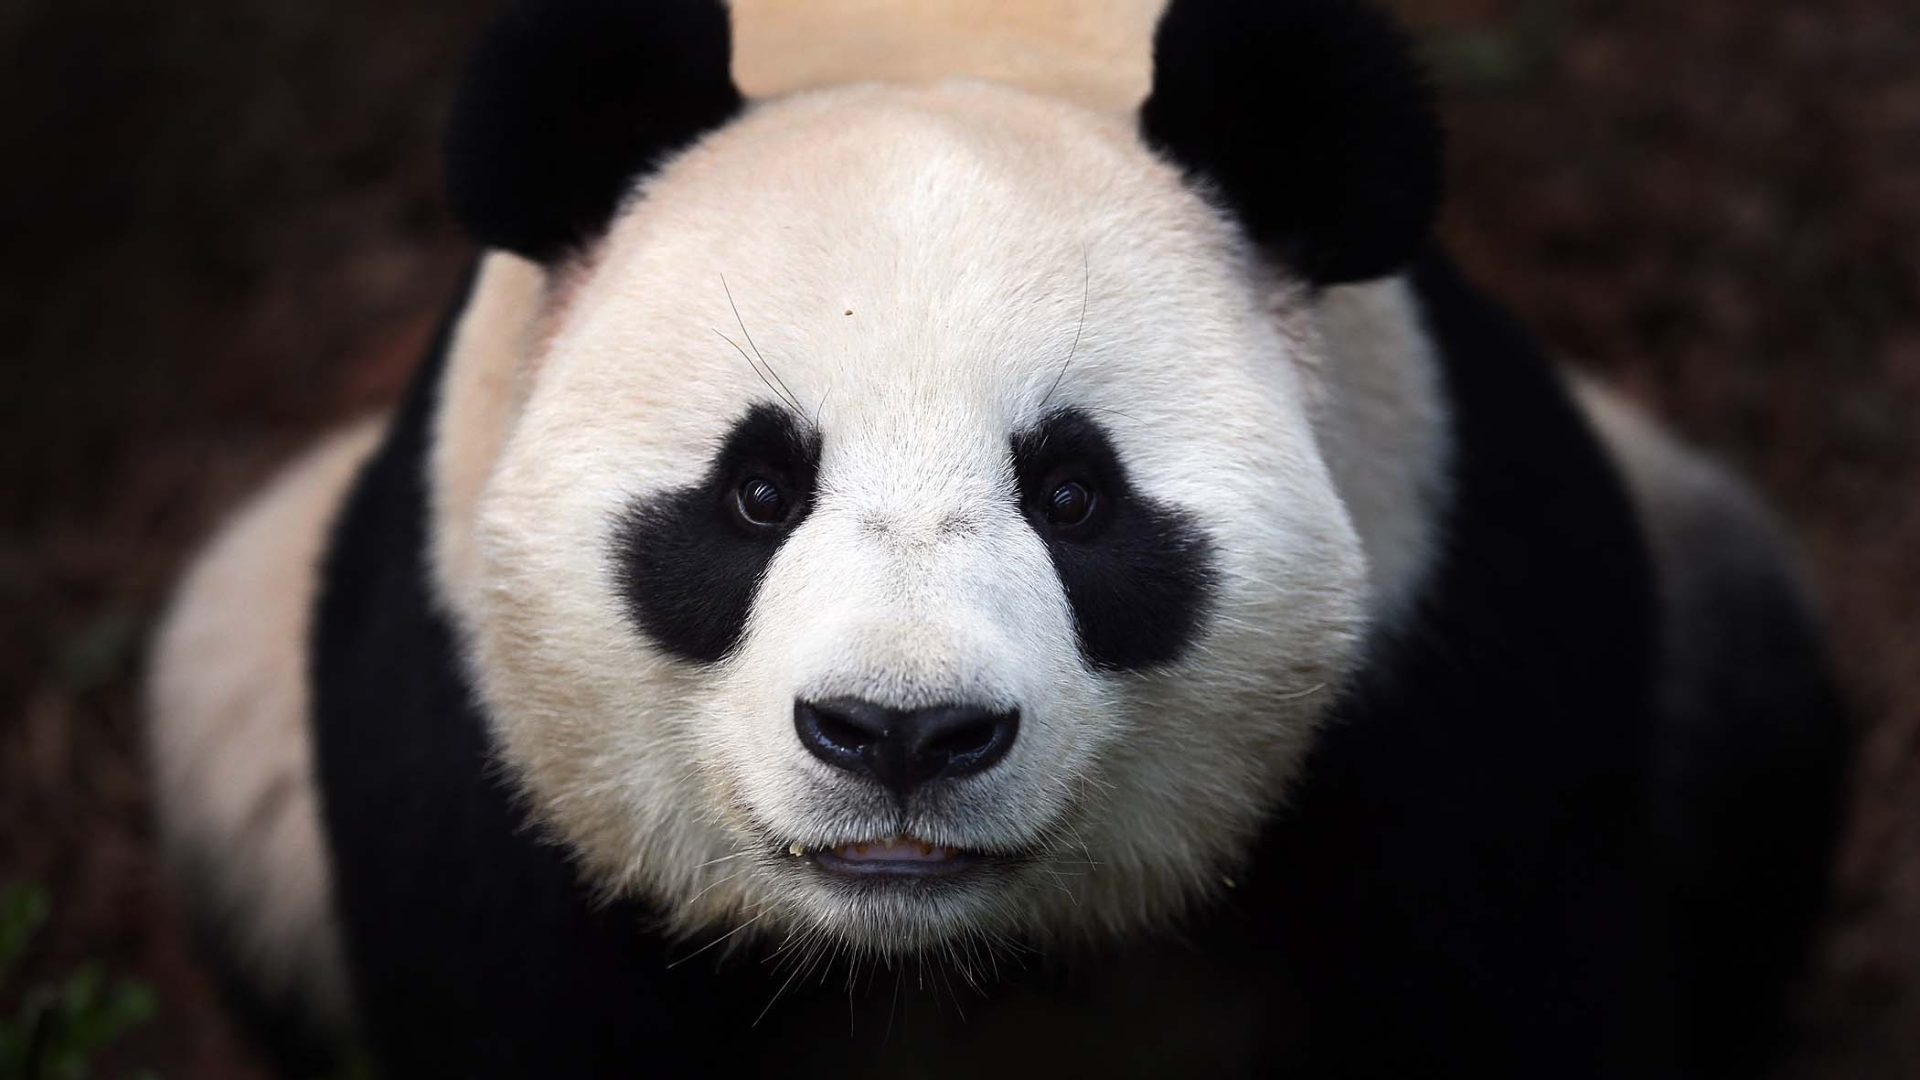 panda cute wallpaper - HD Desktop Wallpapers | 4k HD